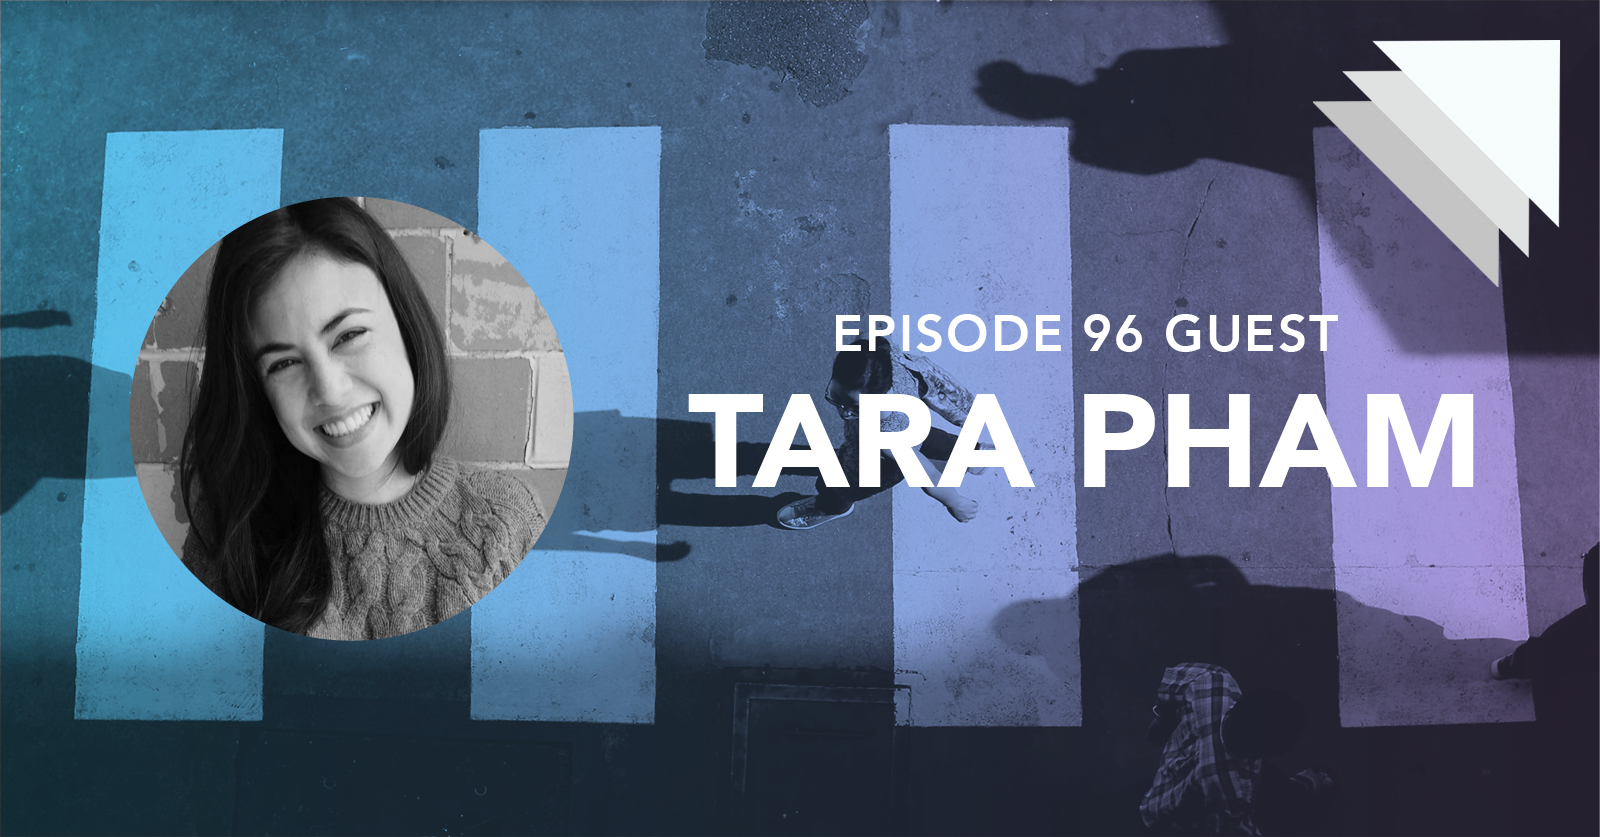 Episode 96 guest Tara Pham